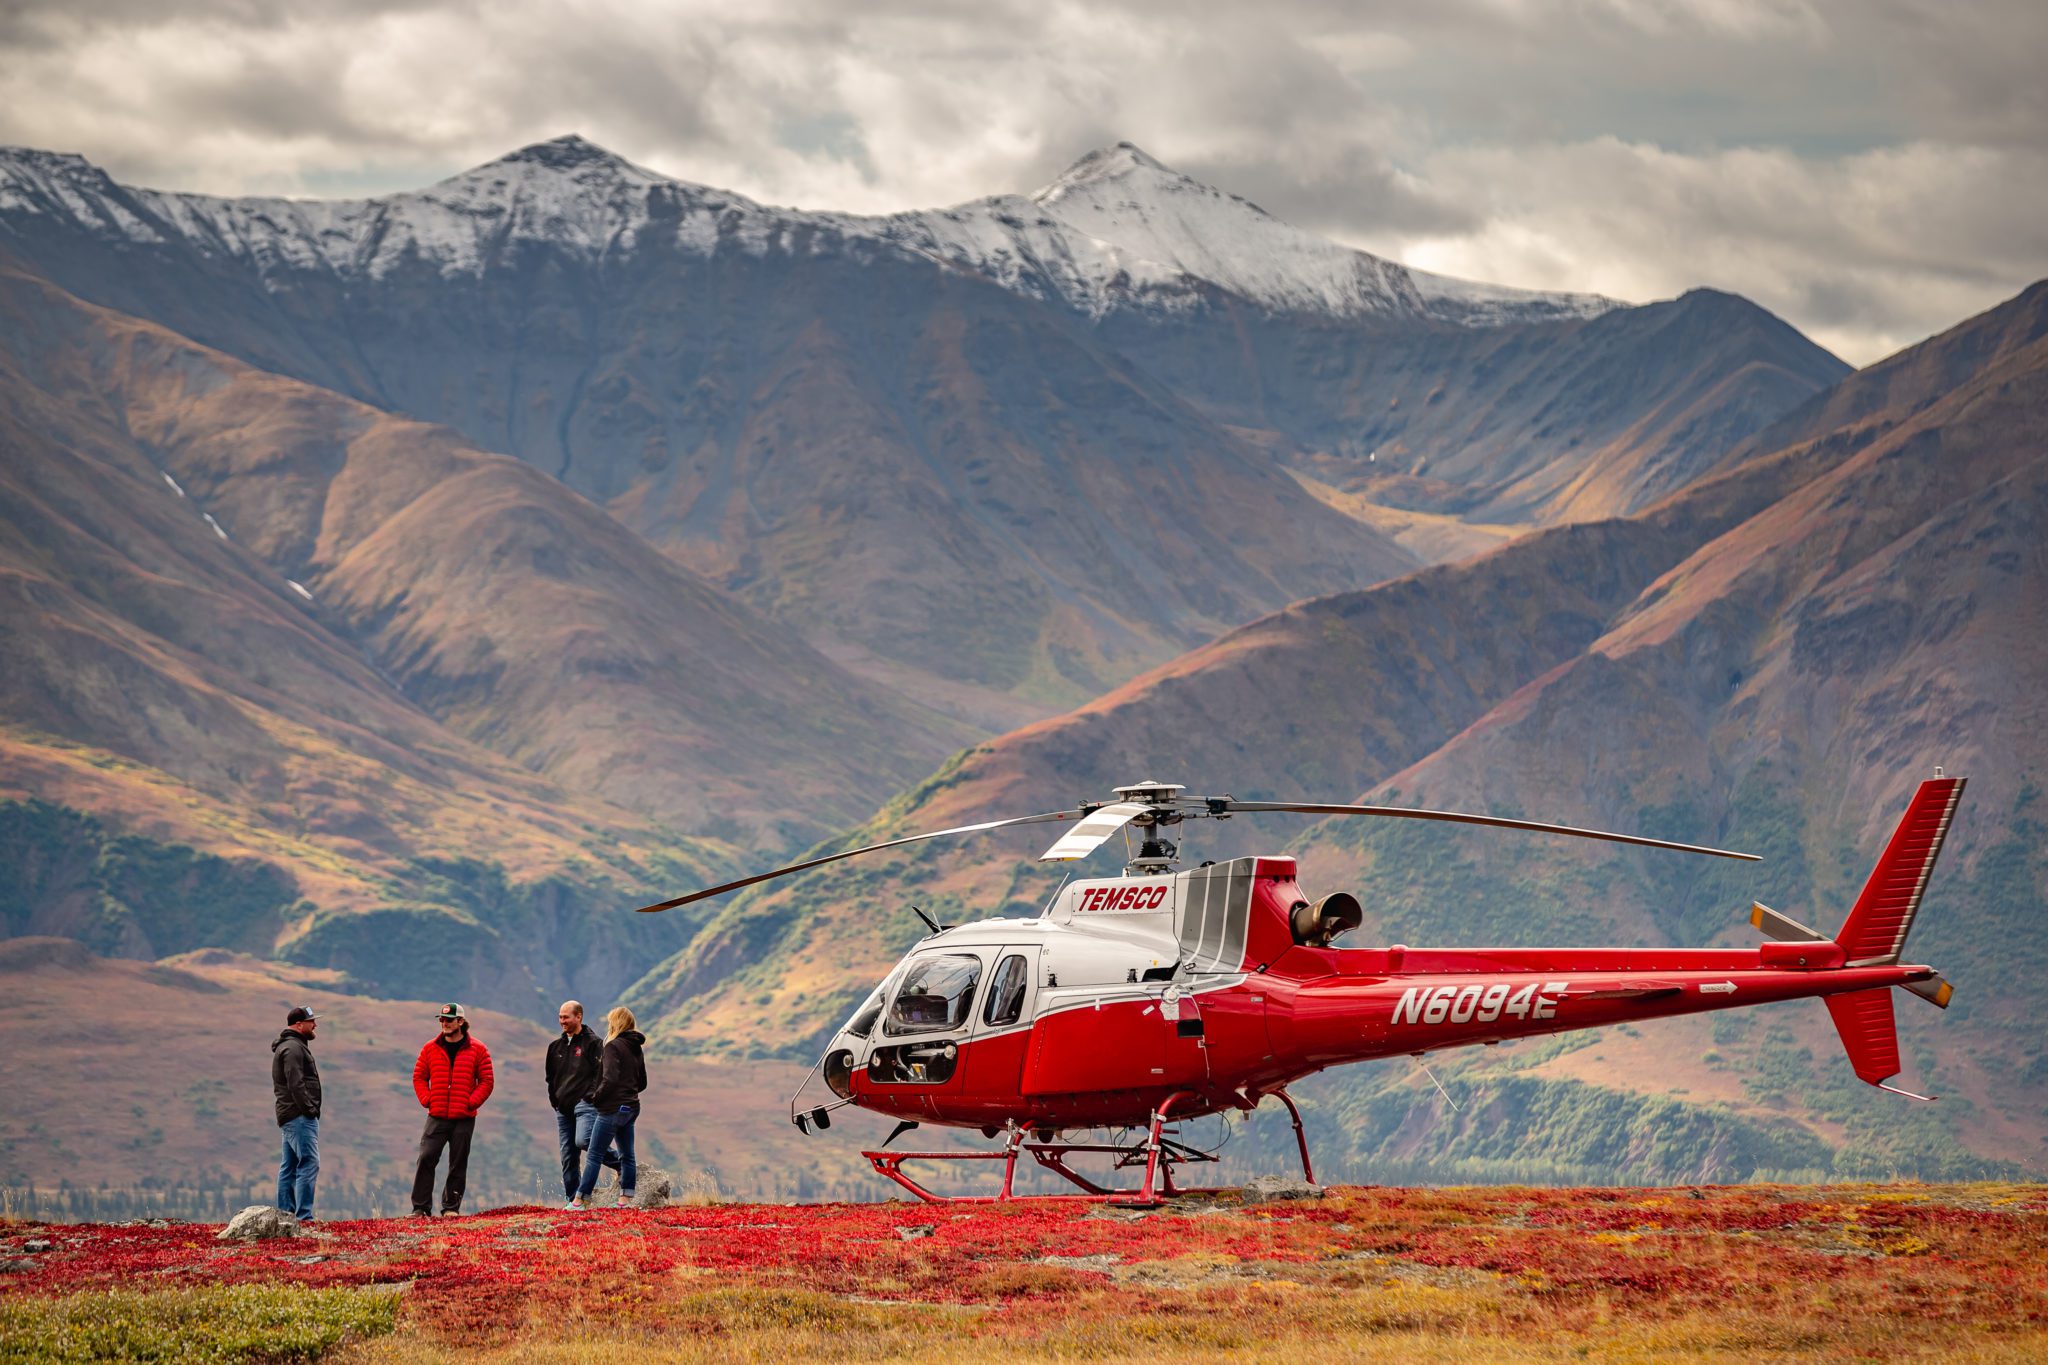 denali helicopter tour & glacier landing